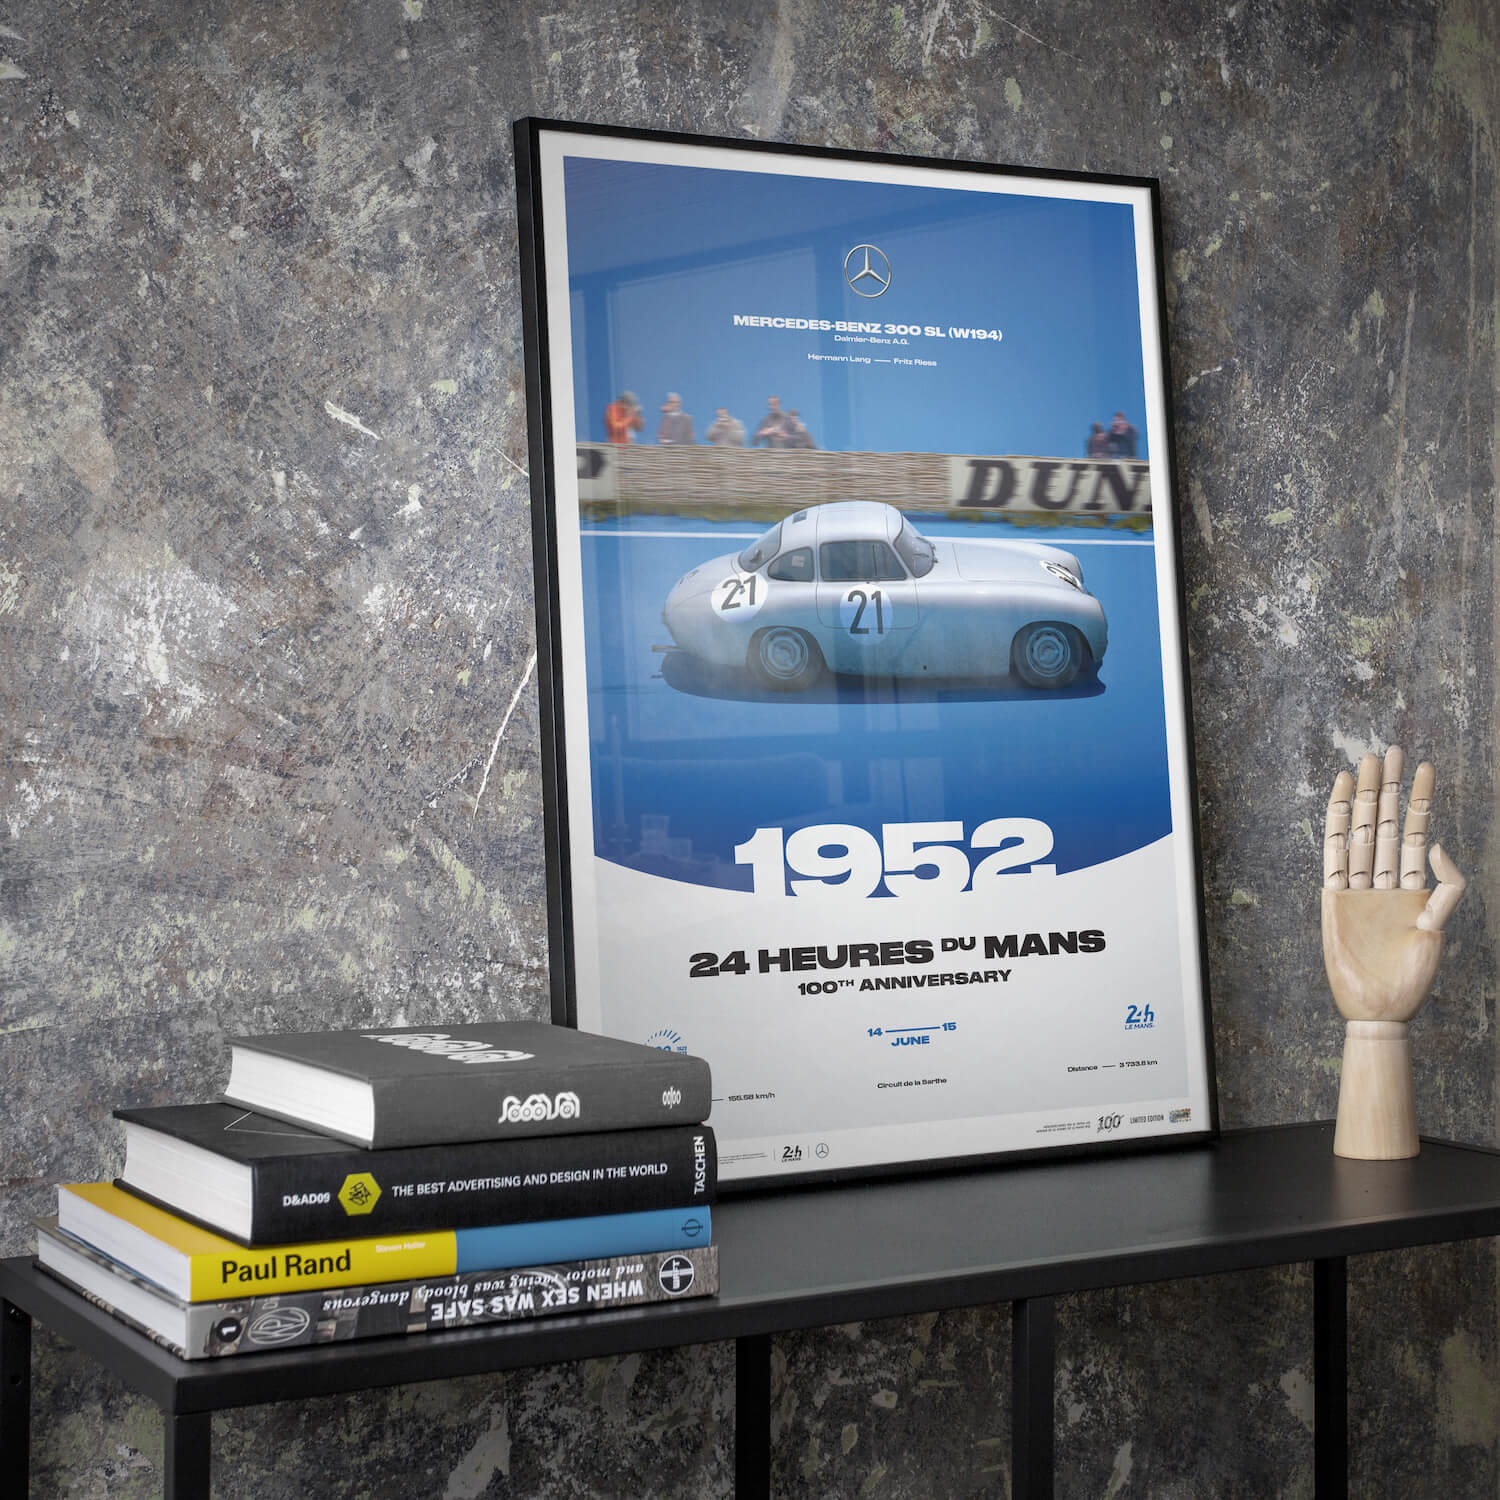 Mercedes-Benz 300 SL (W194) - 24h Le Mans - 100th Anniversary - 1952